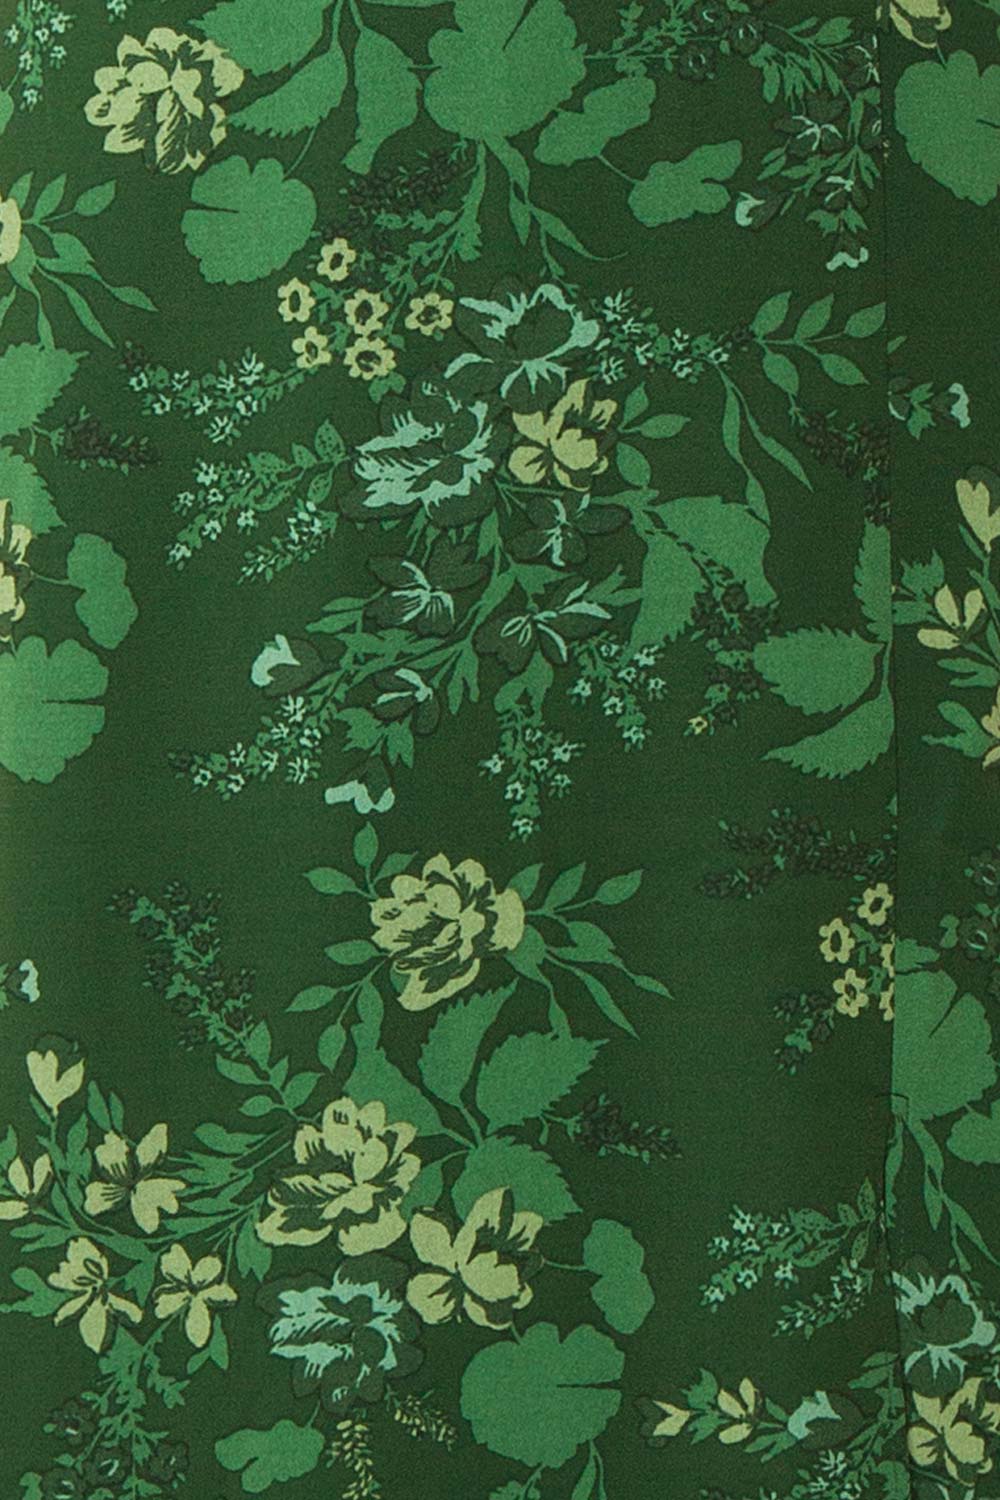 Emirida Long Dark Green Floral Dress | Boutique 1861 fabric 